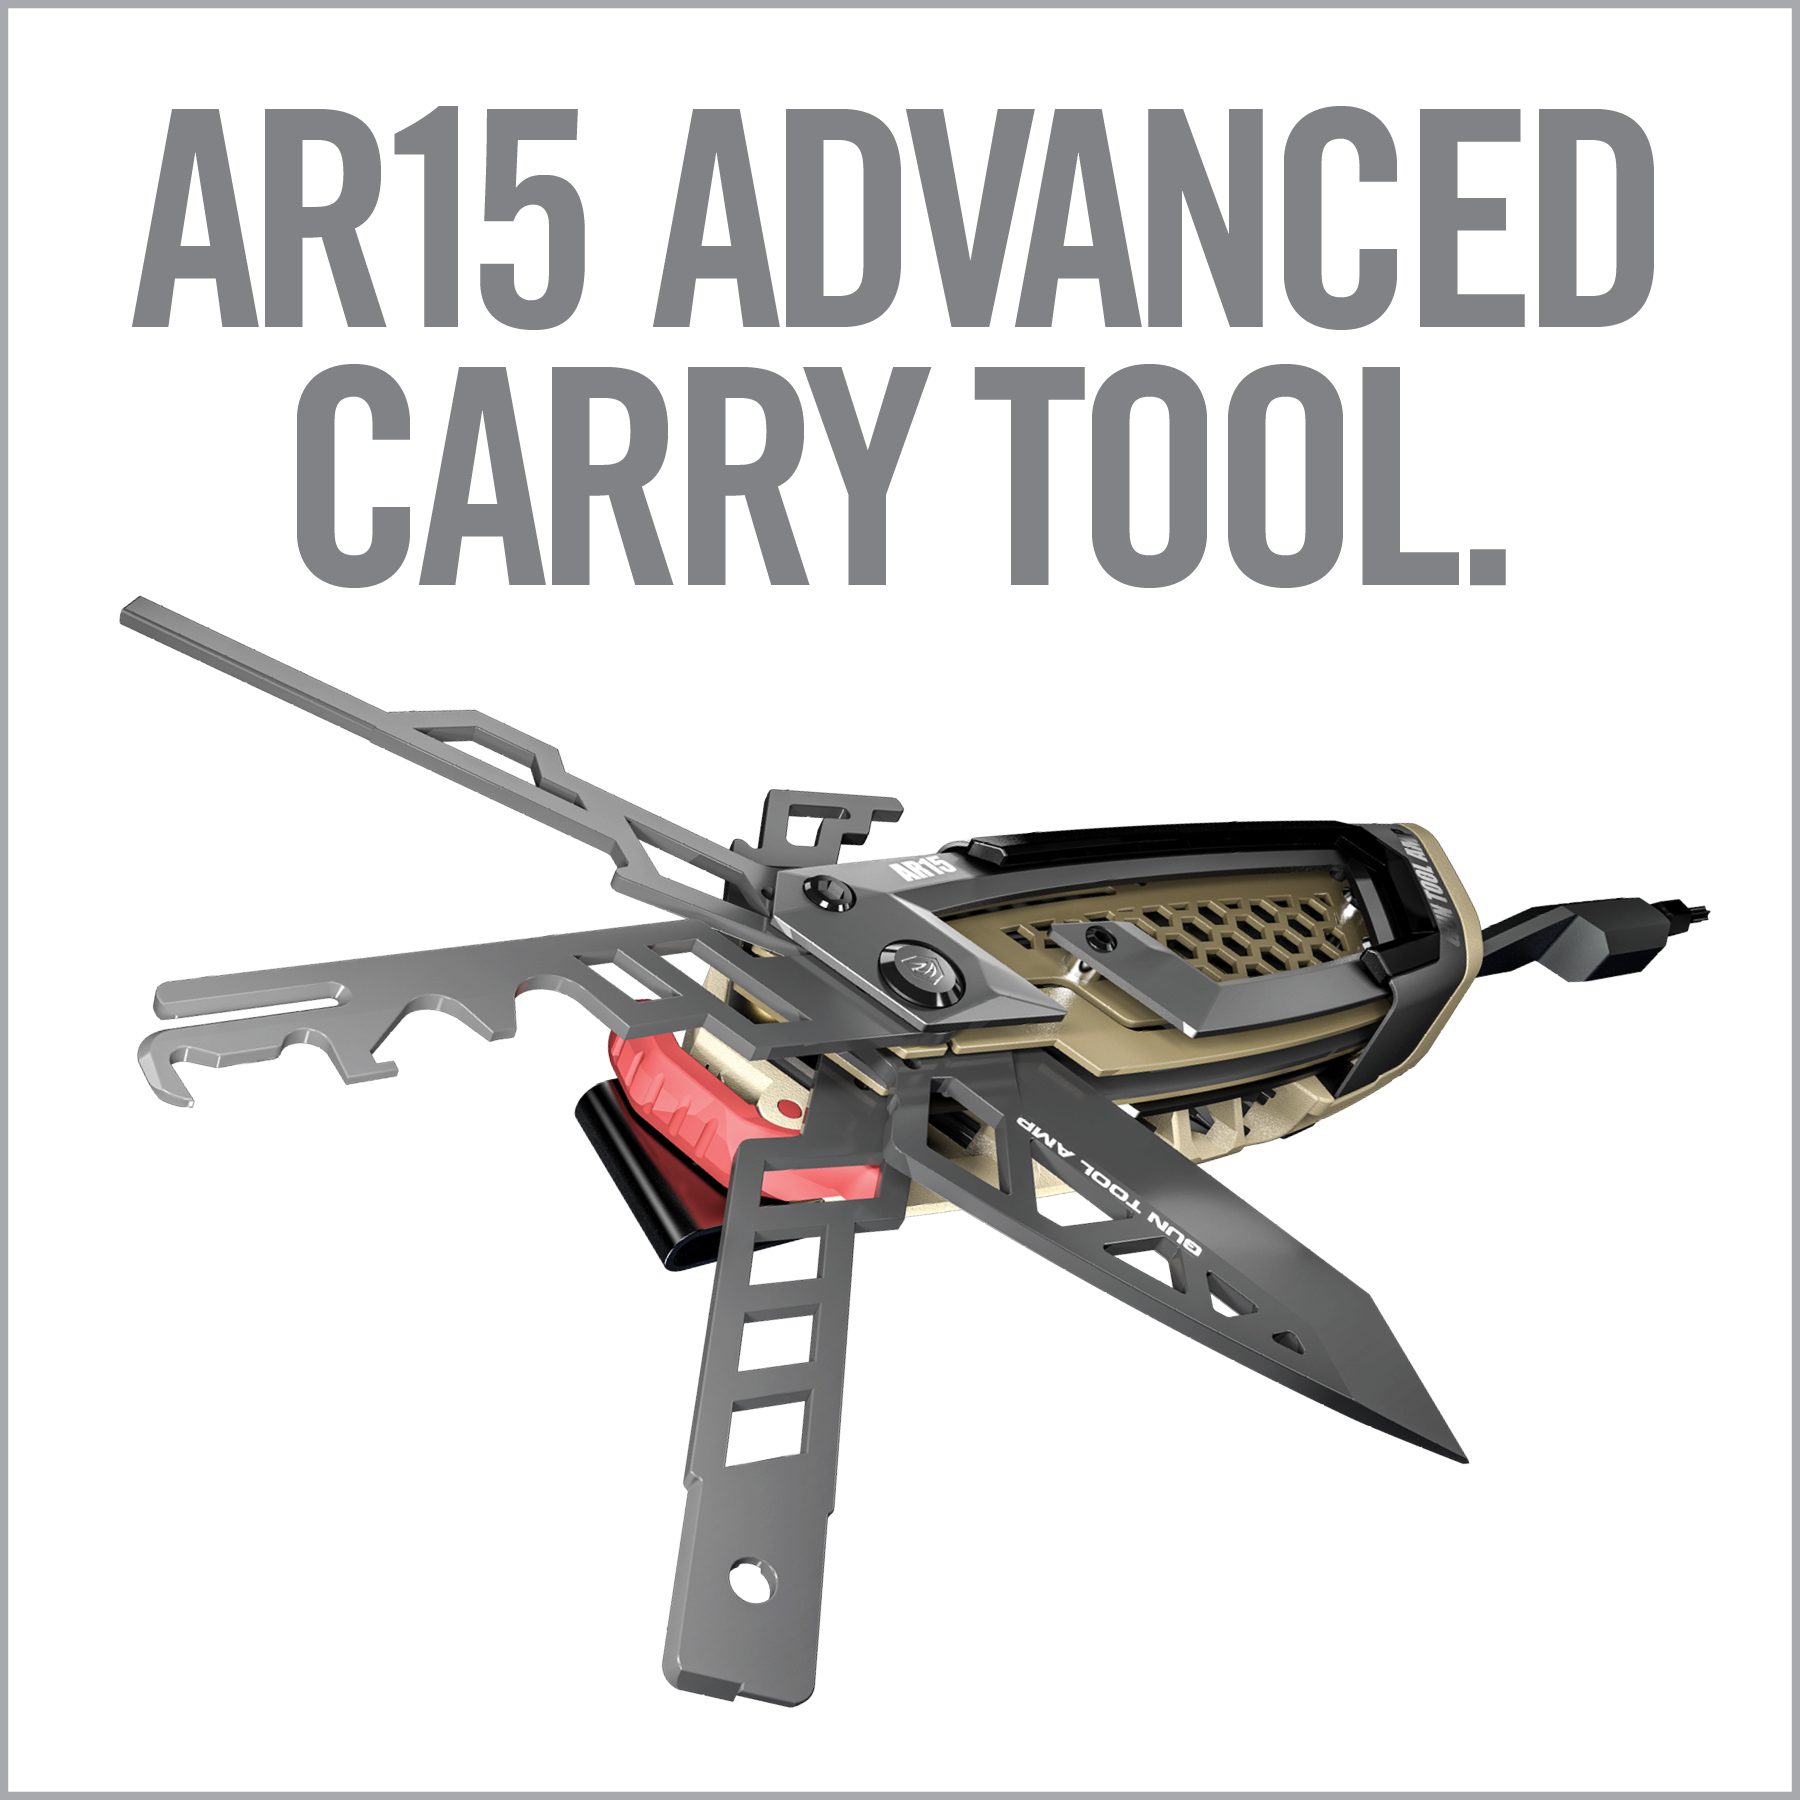 REAL AVID - Gun Tool Amp AR15